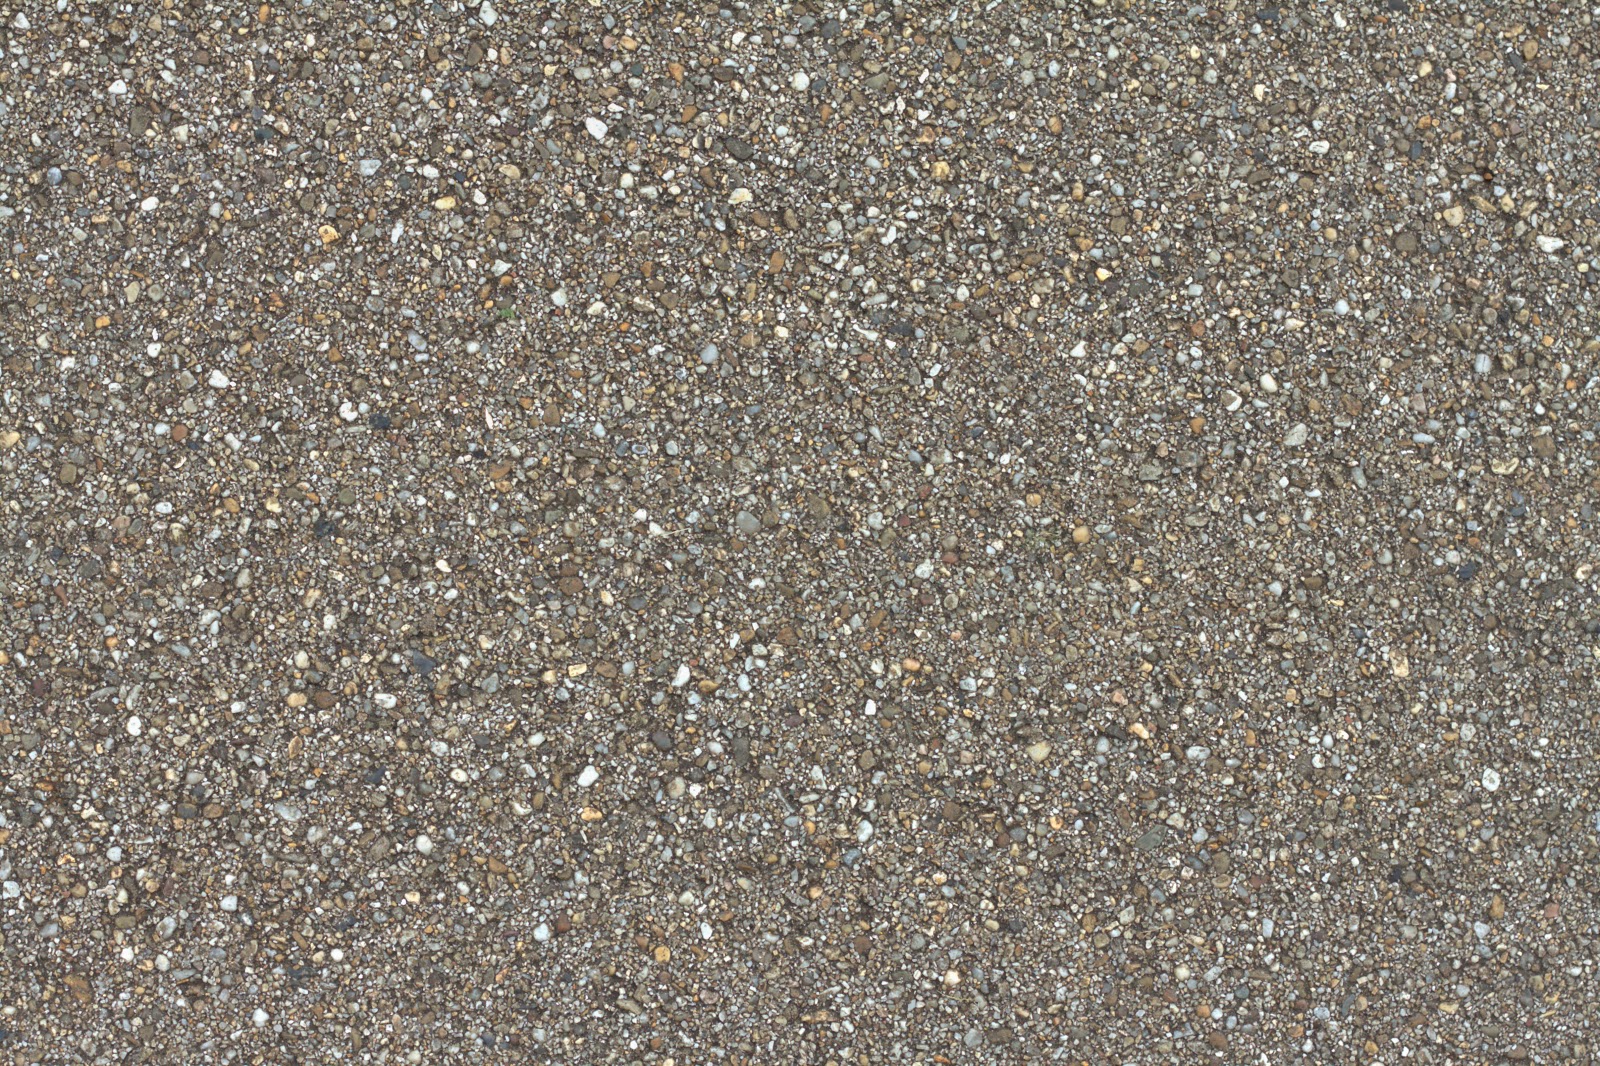 Cobblestone small stones concrete floor texture 4770x3178